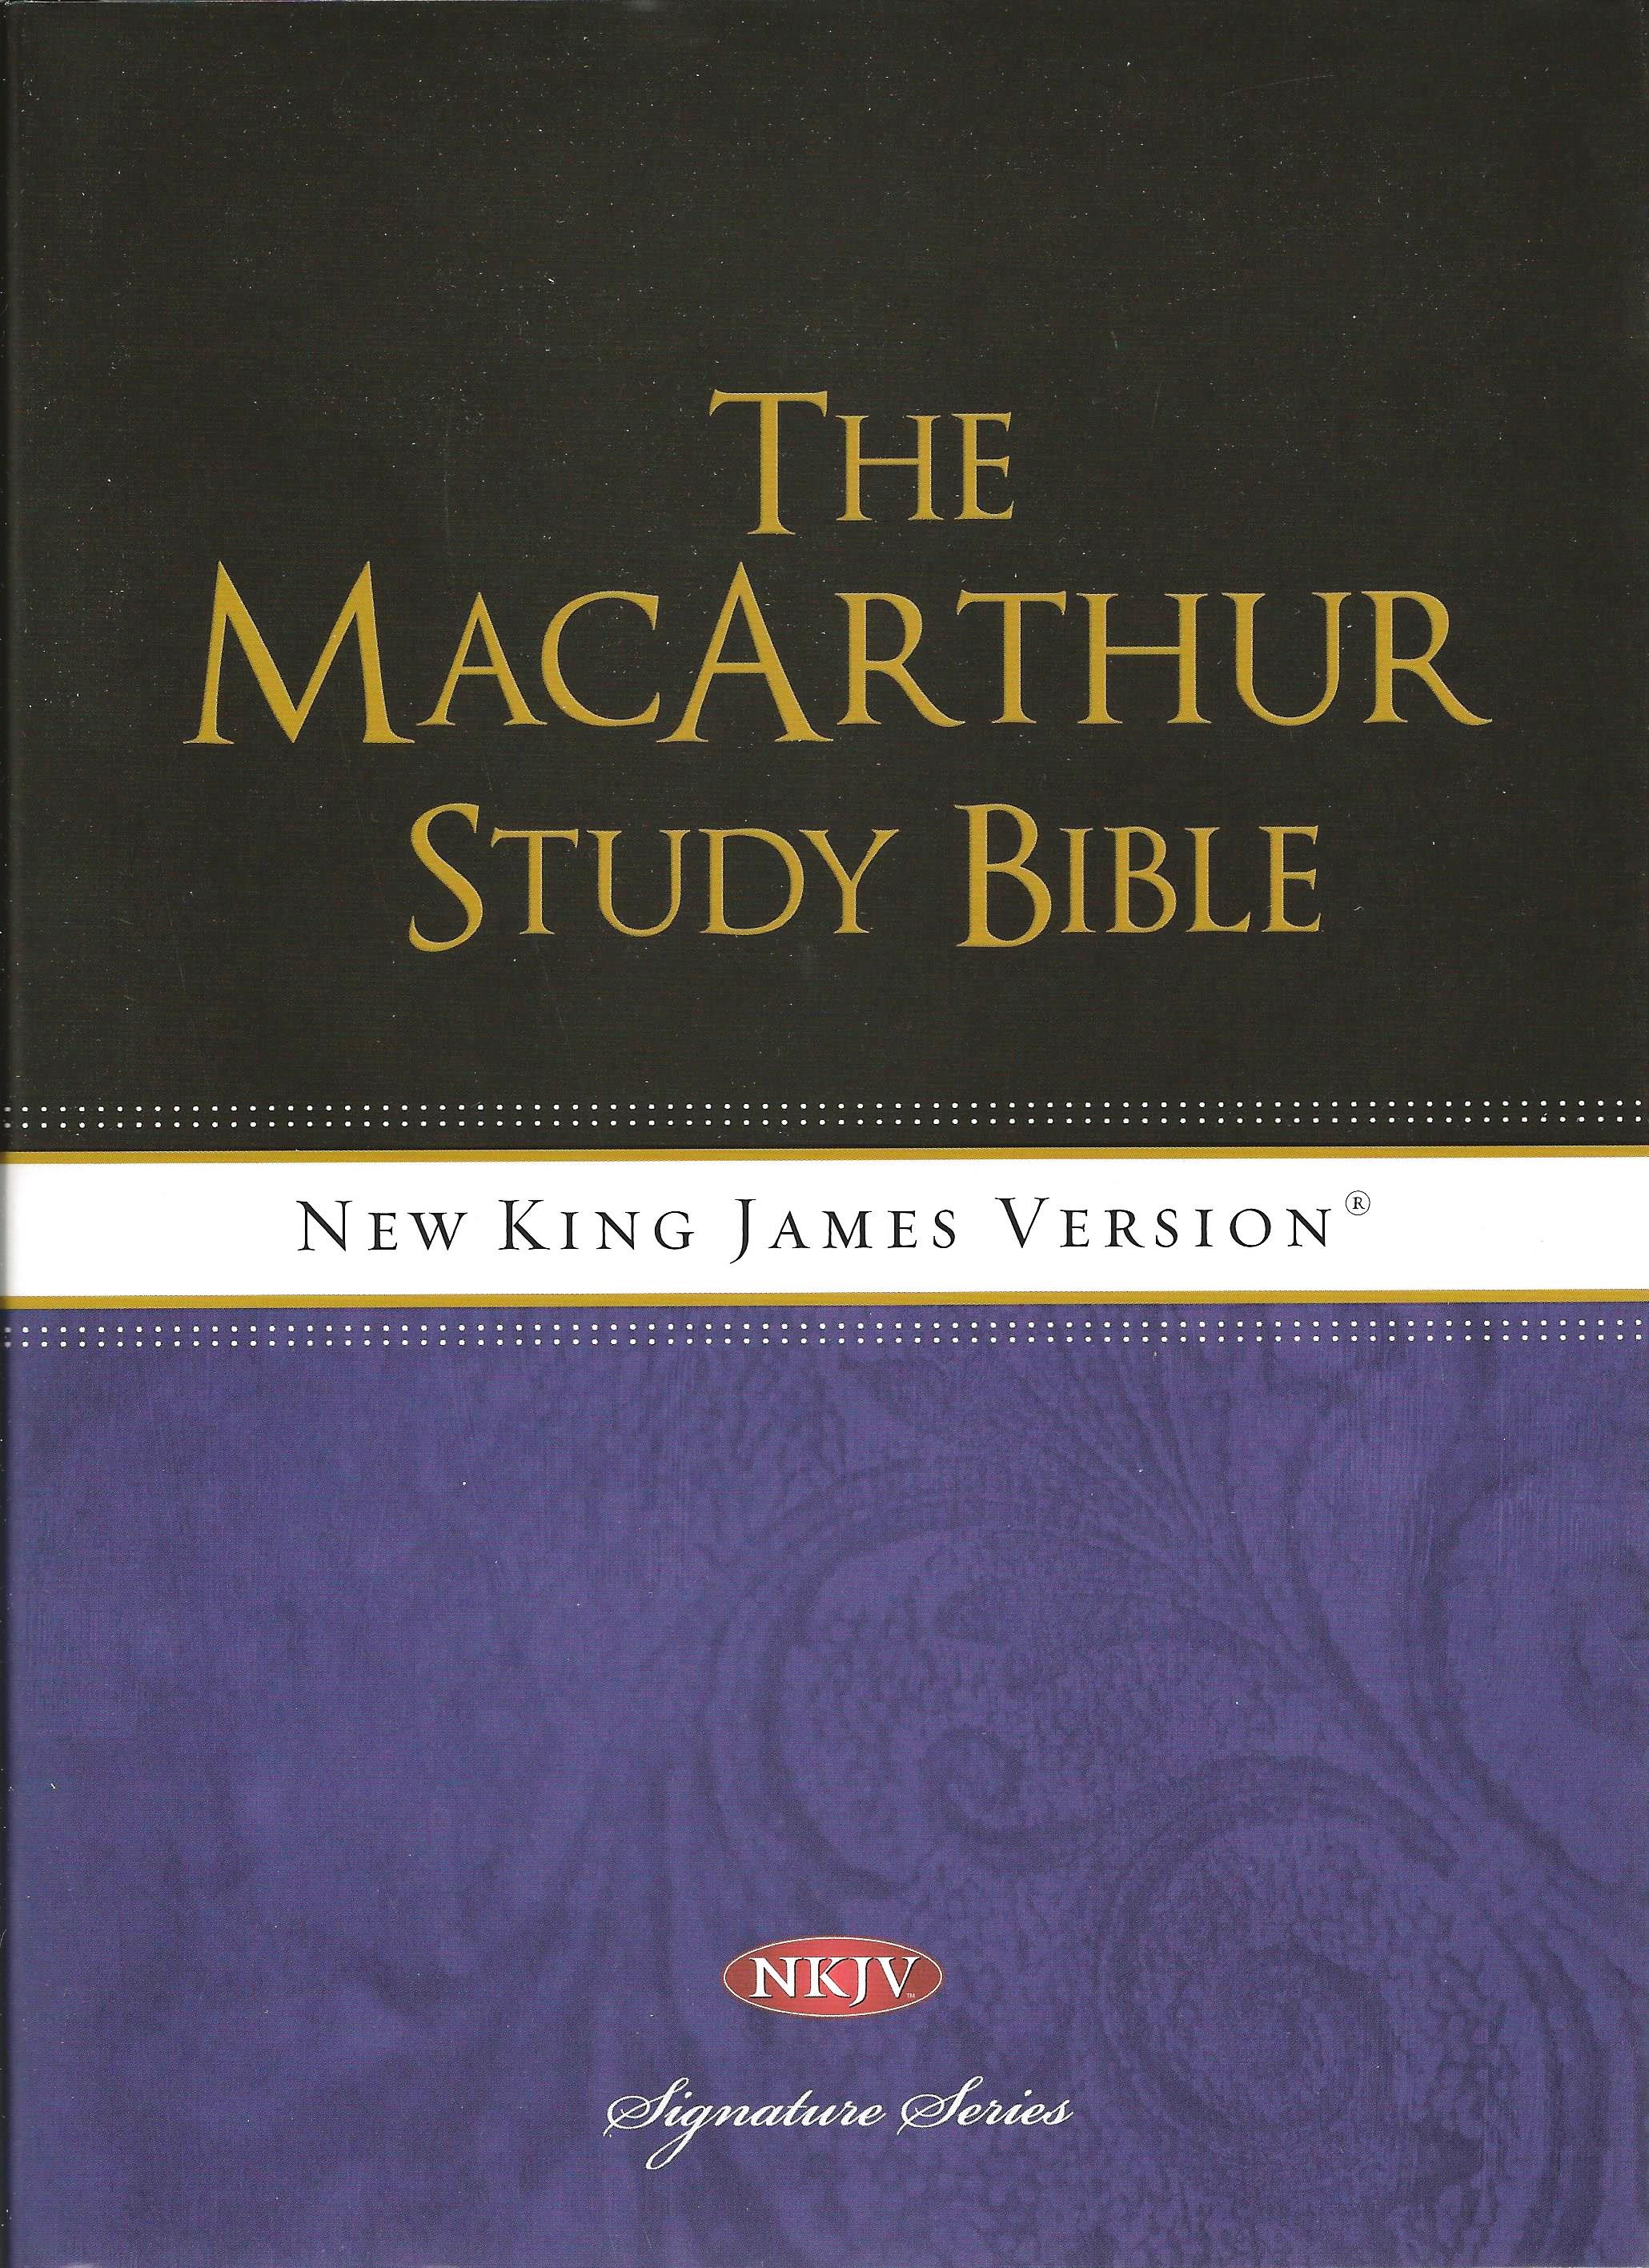 New King James Version